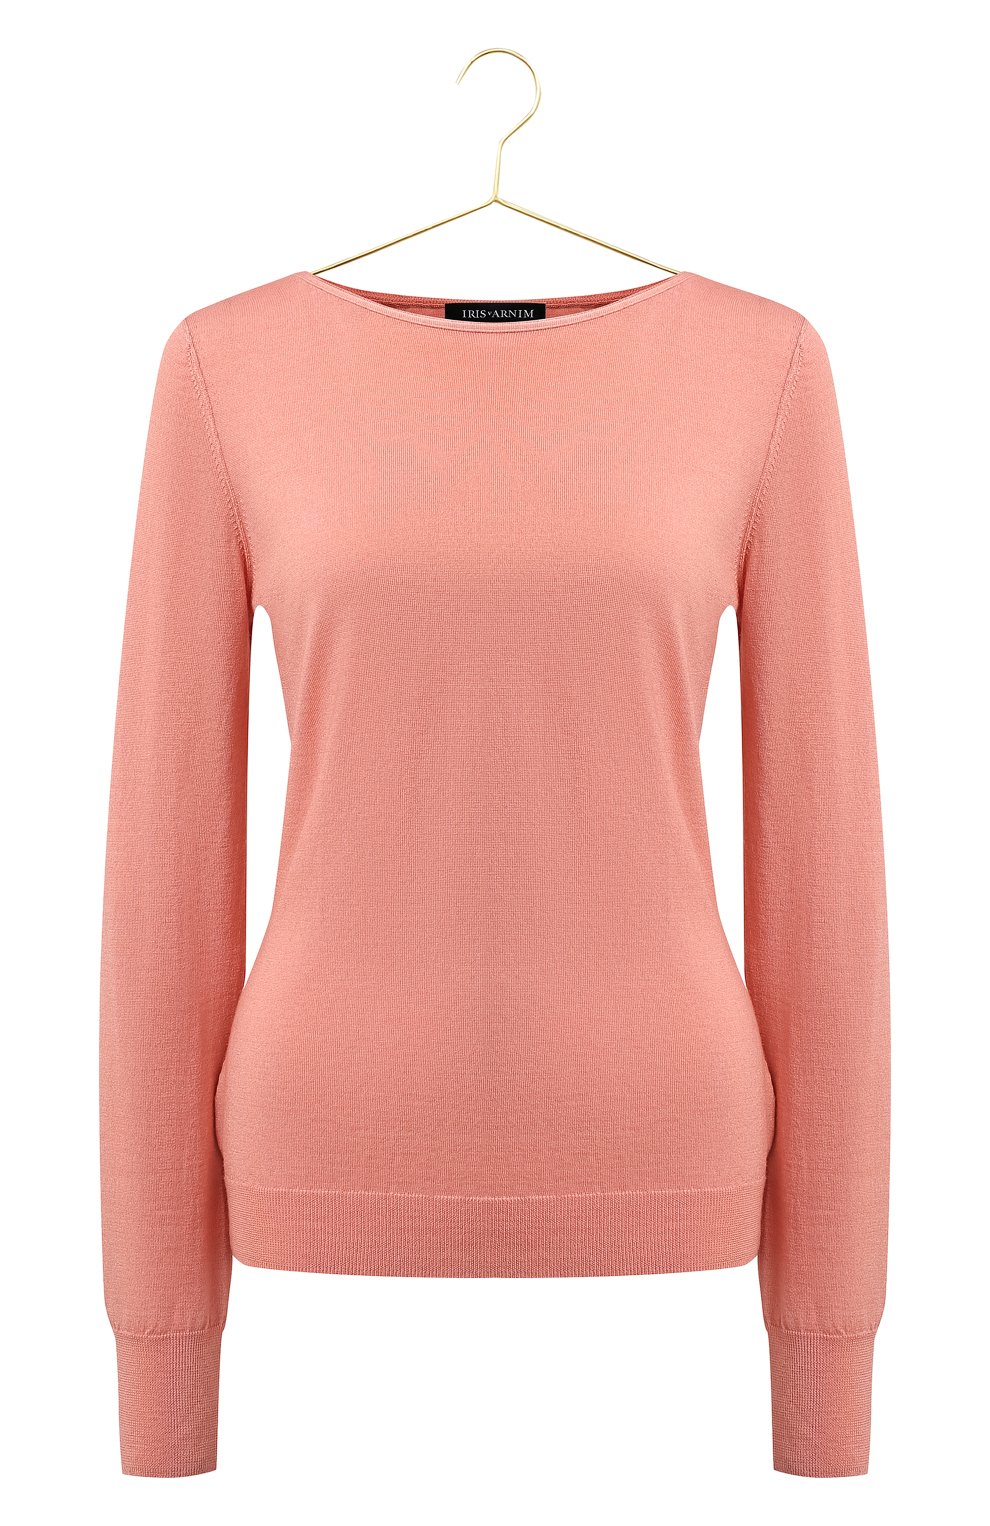 Пуловер из шерсти и шелка | Iris Von Arnim | Розовый - 1